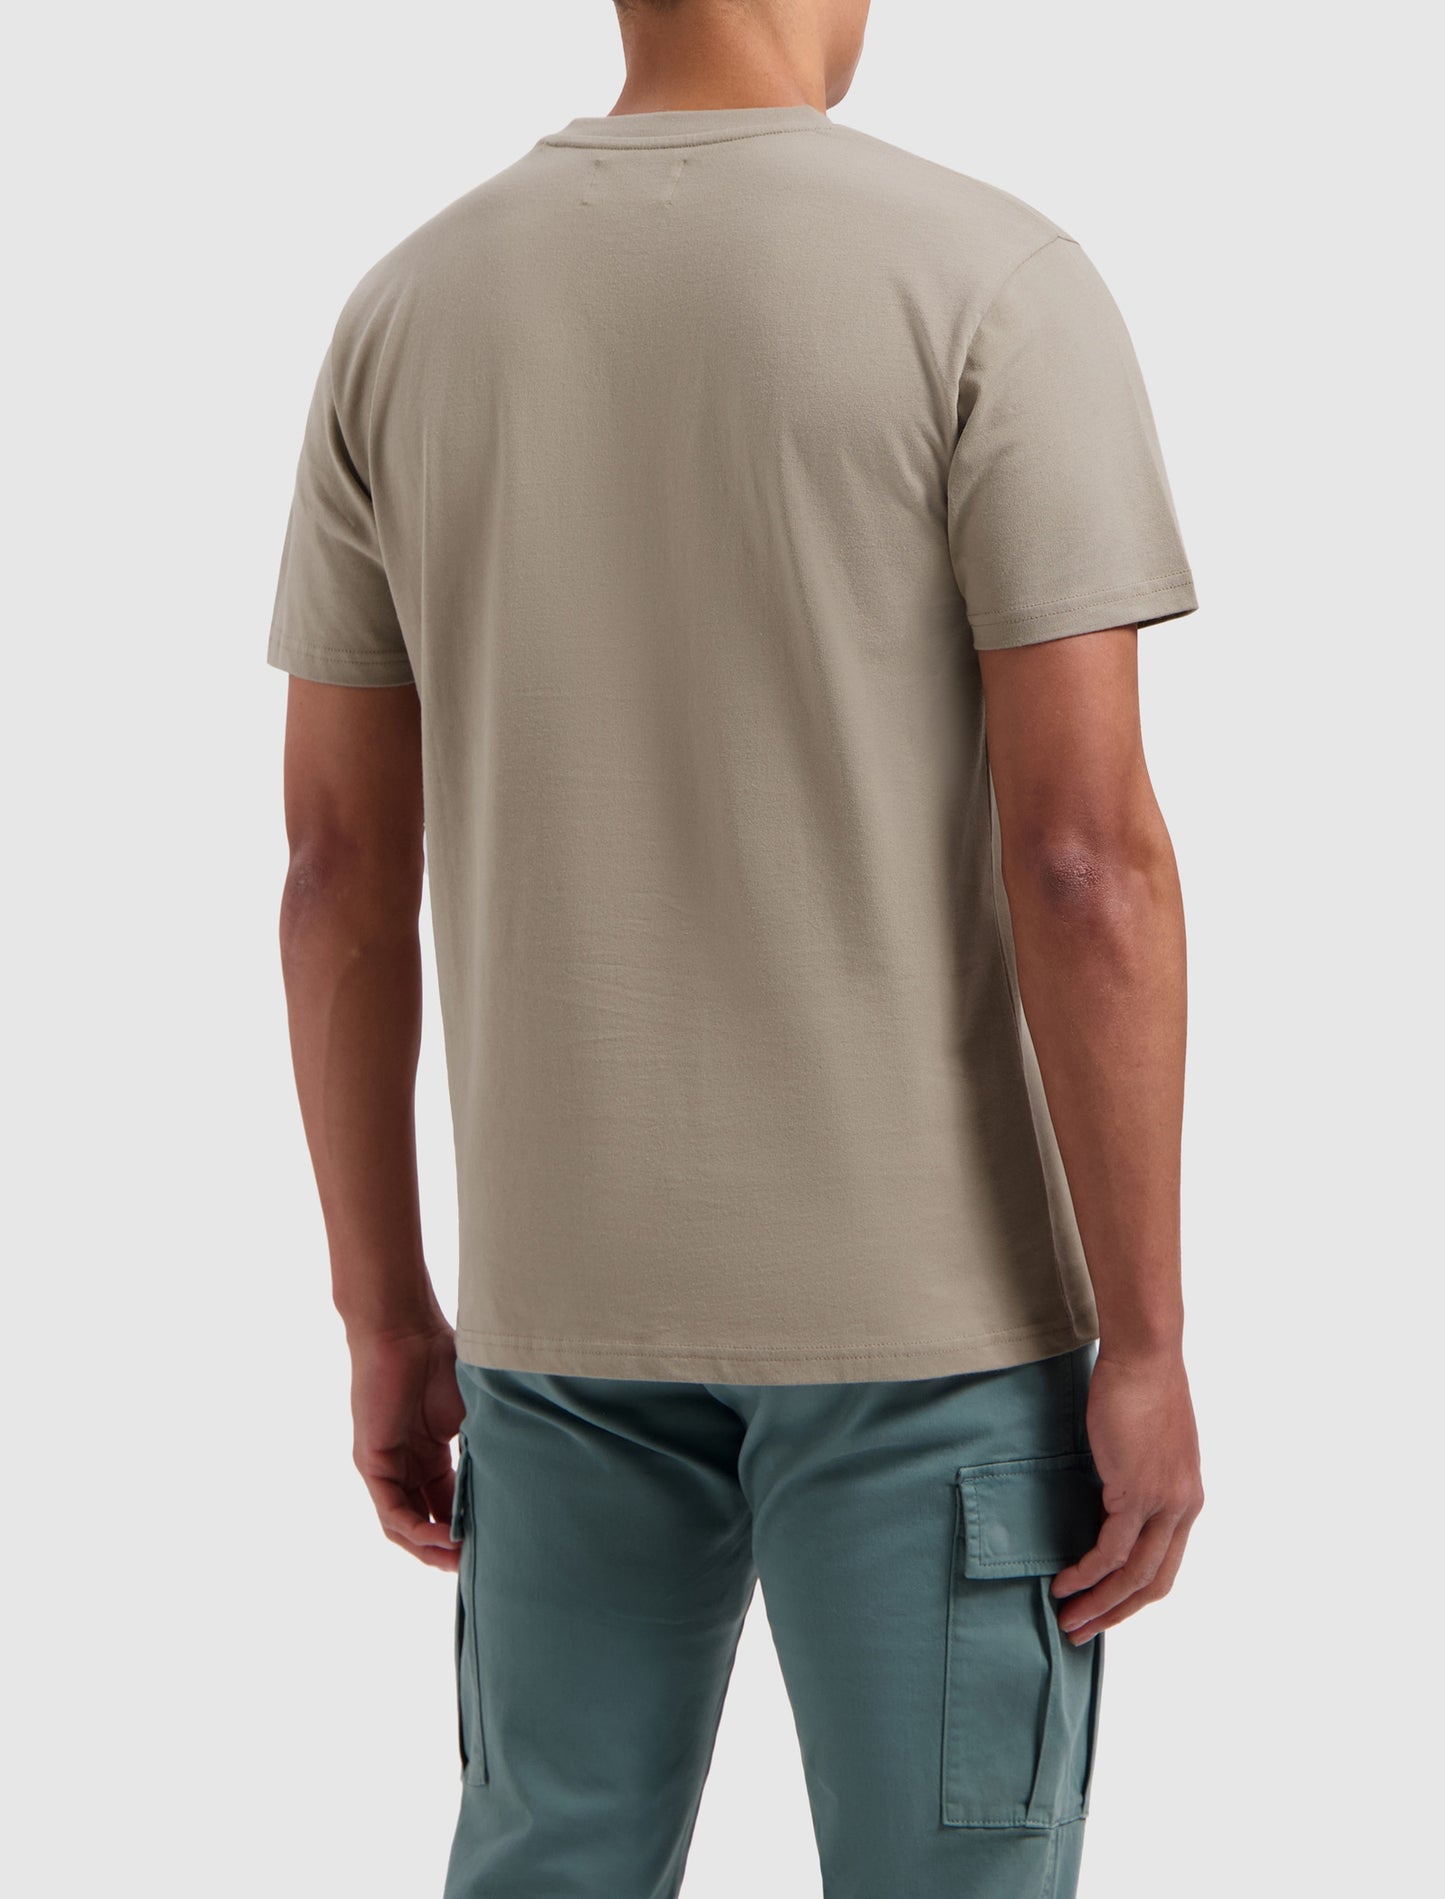 PURE PATH | Desert Mirage T-Shirt - Taupe